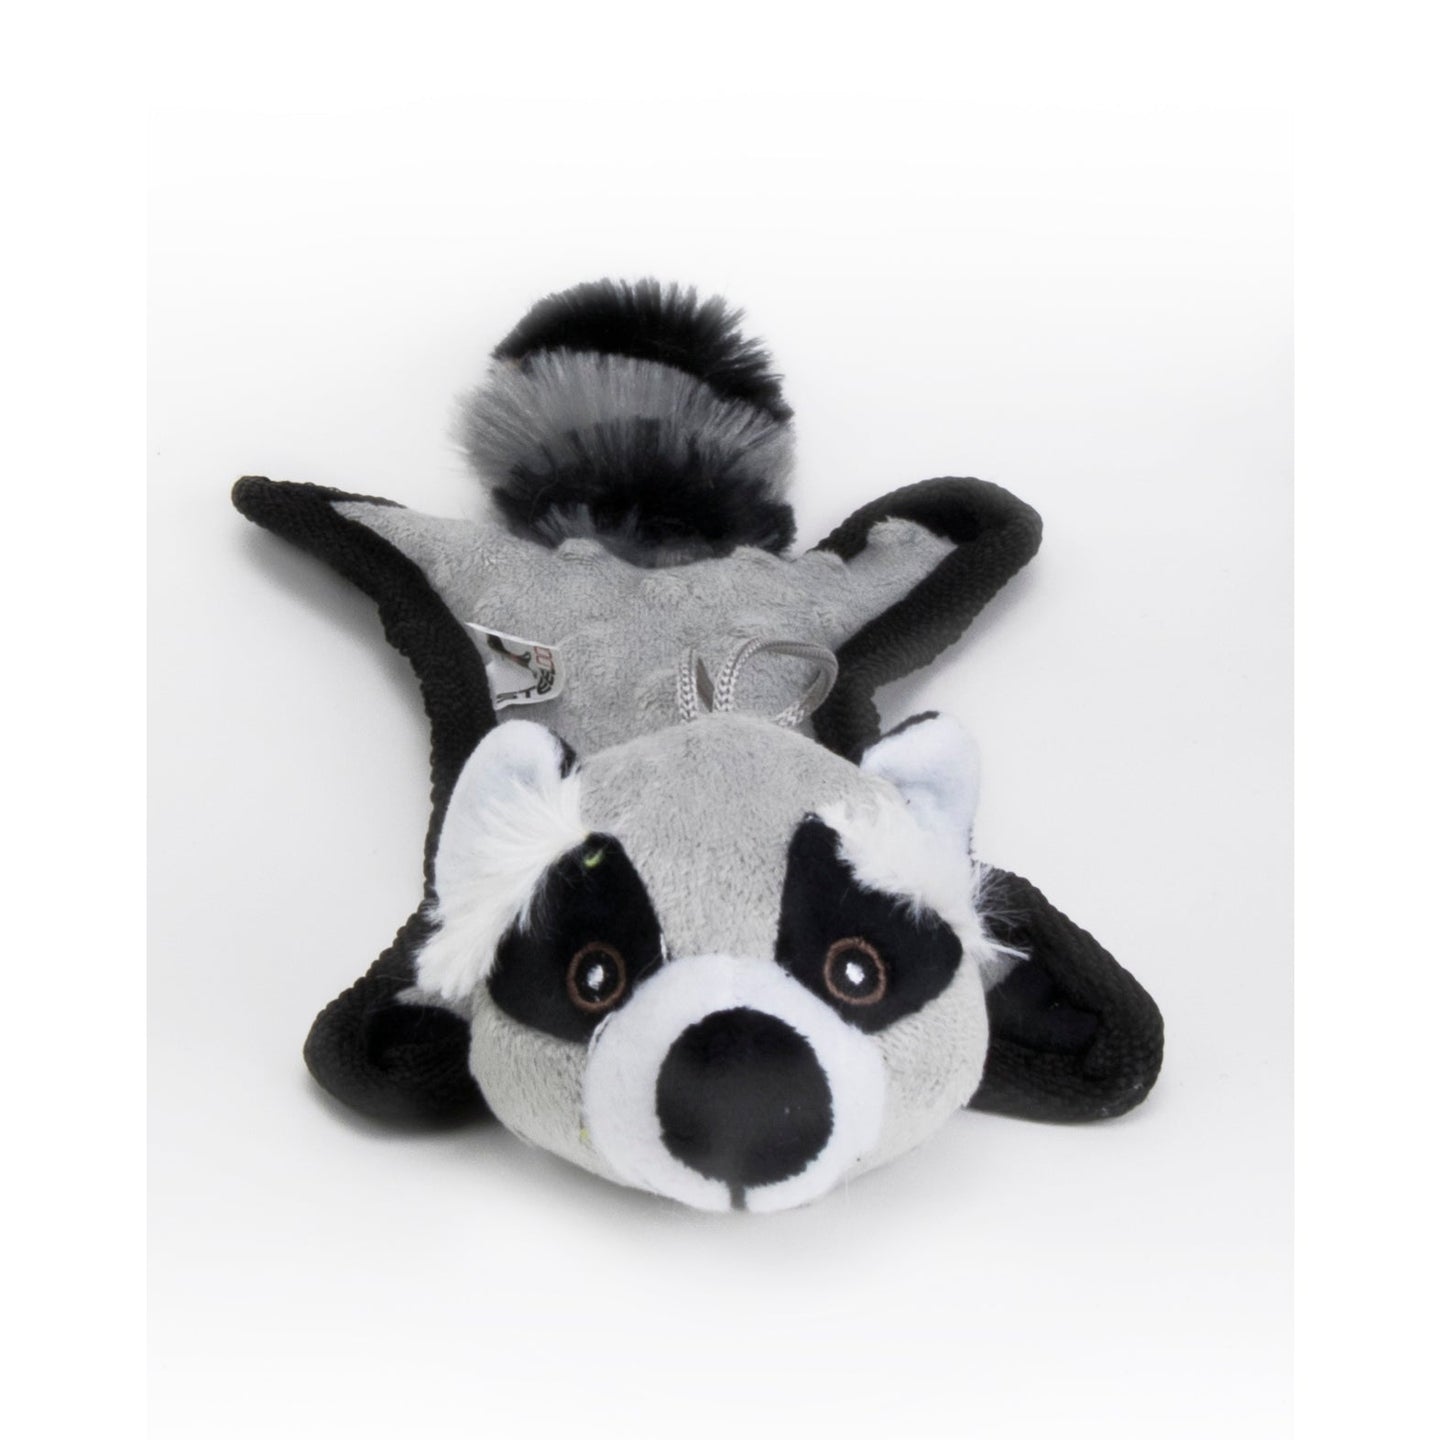 Steel Dog Toys - Baby Bumpie Raccoon - Bulletproof Pet Products Inc